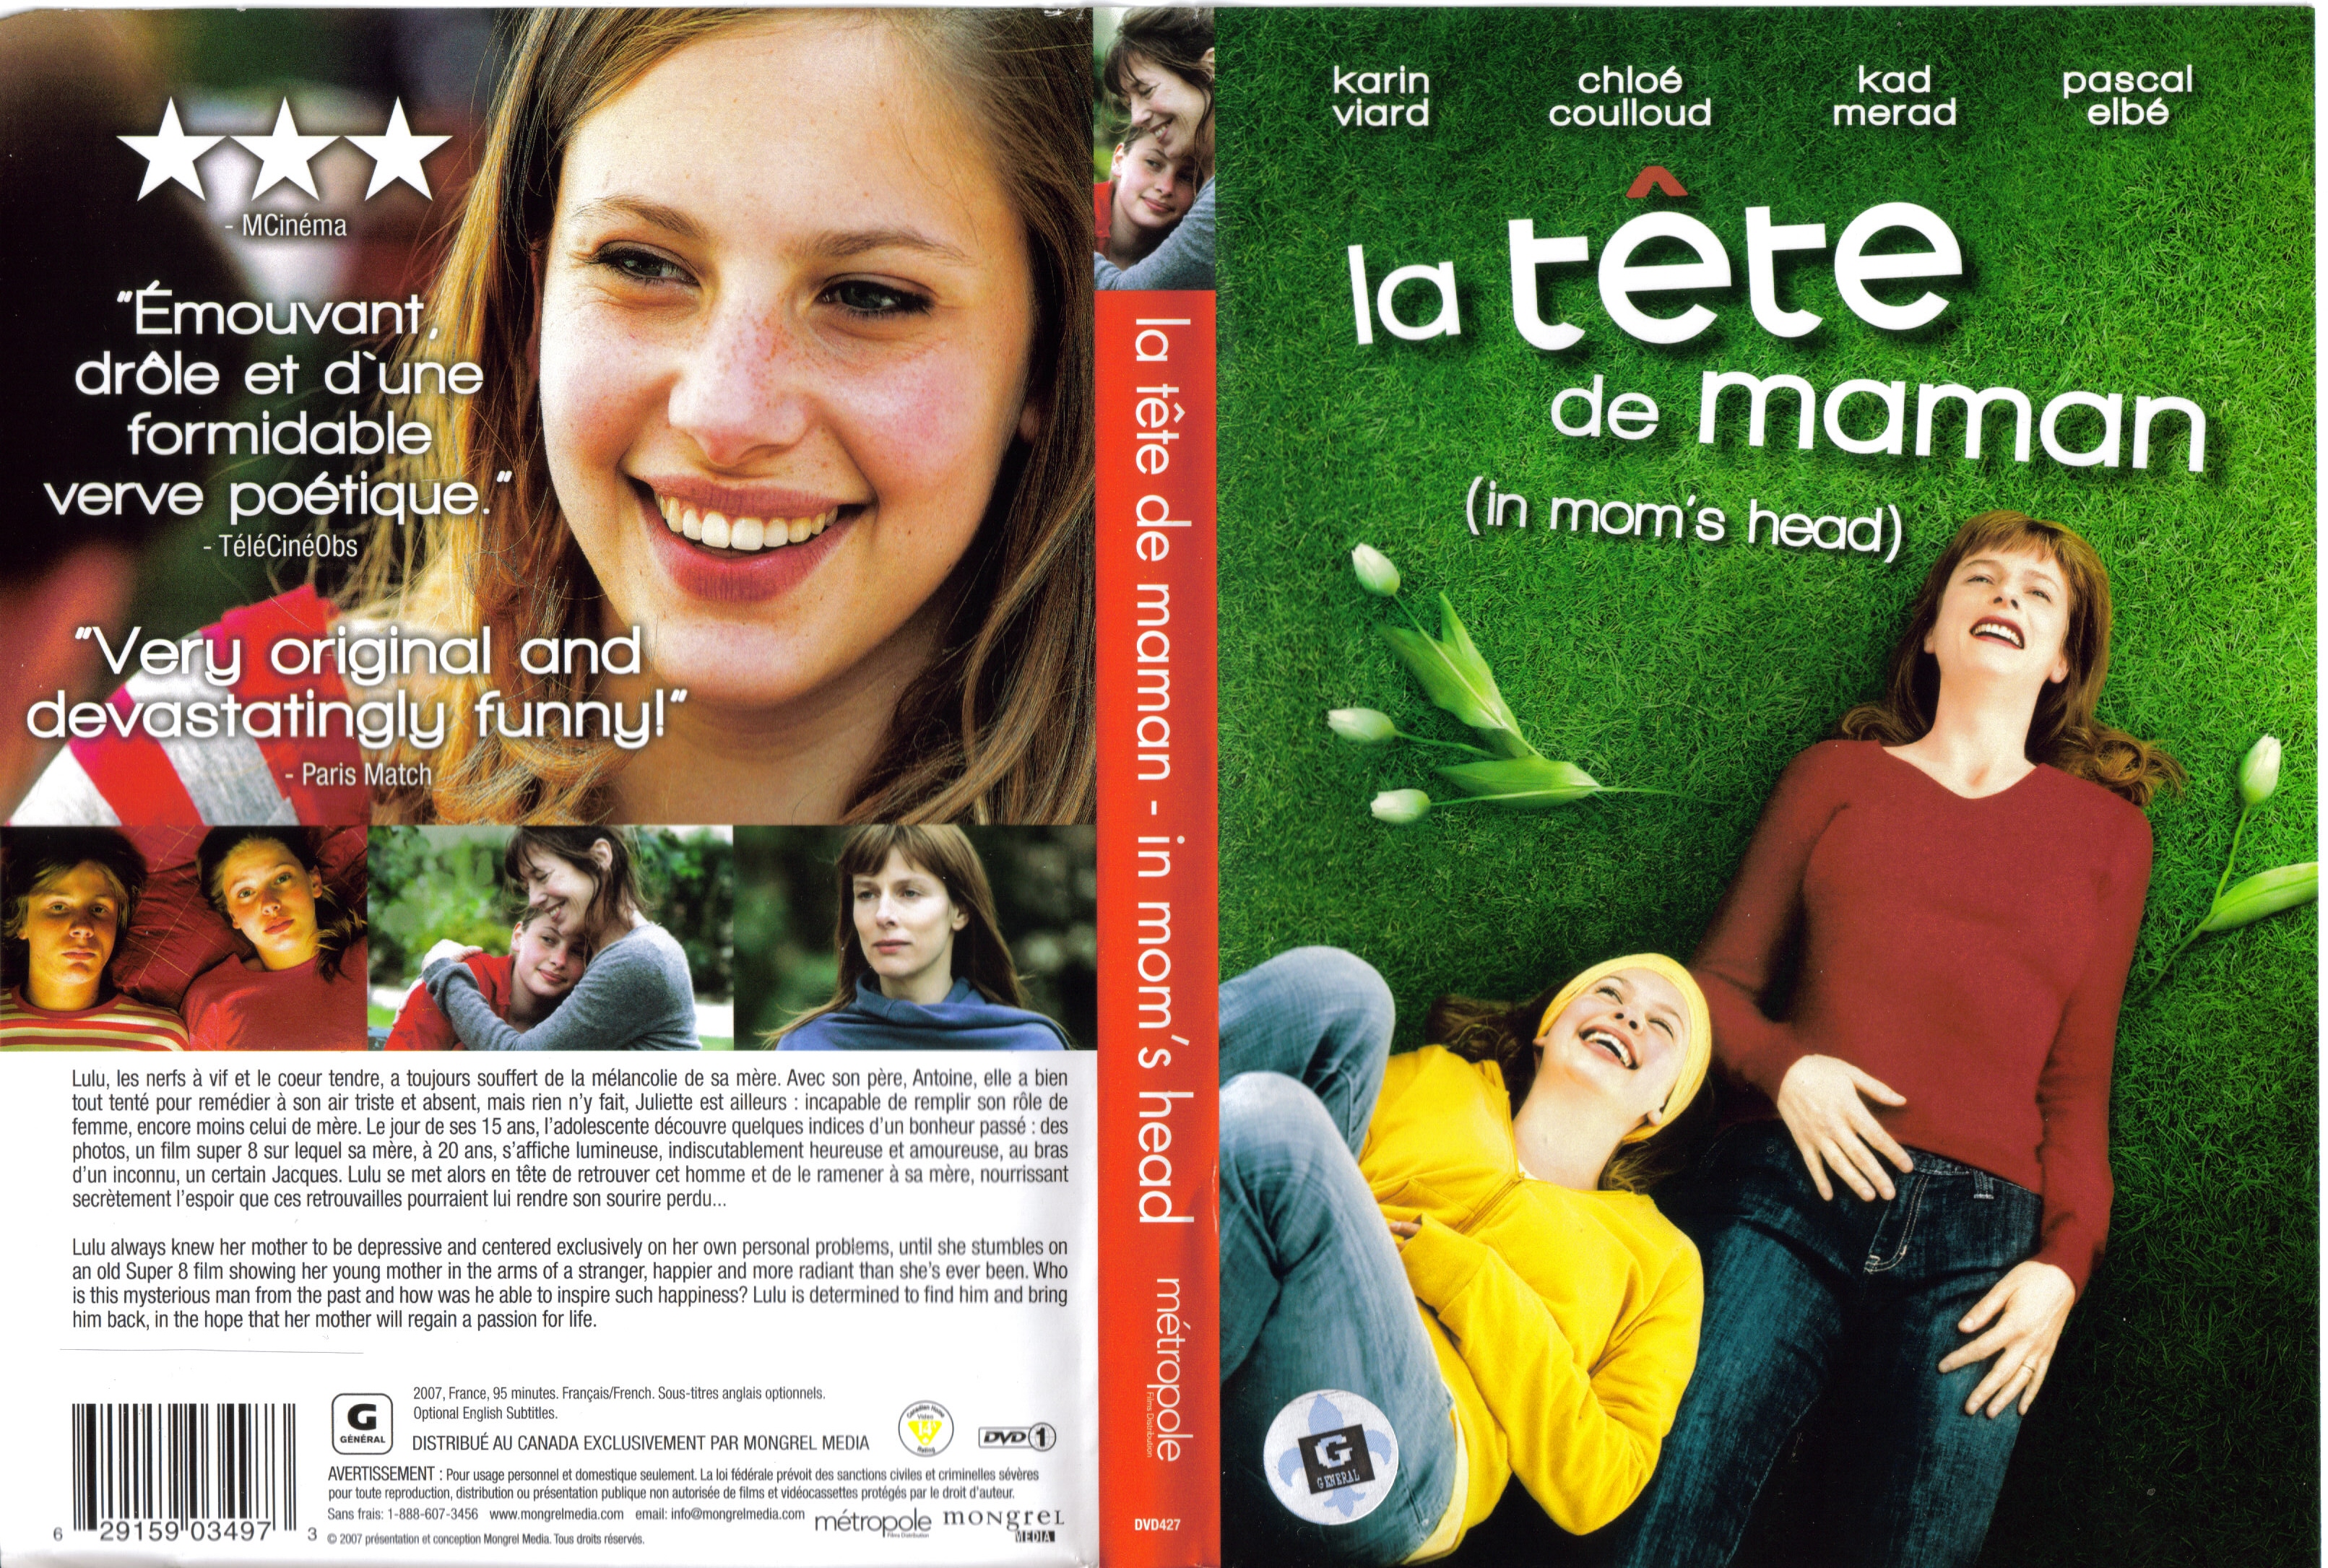 Jaquette DVD La tte de maman v2